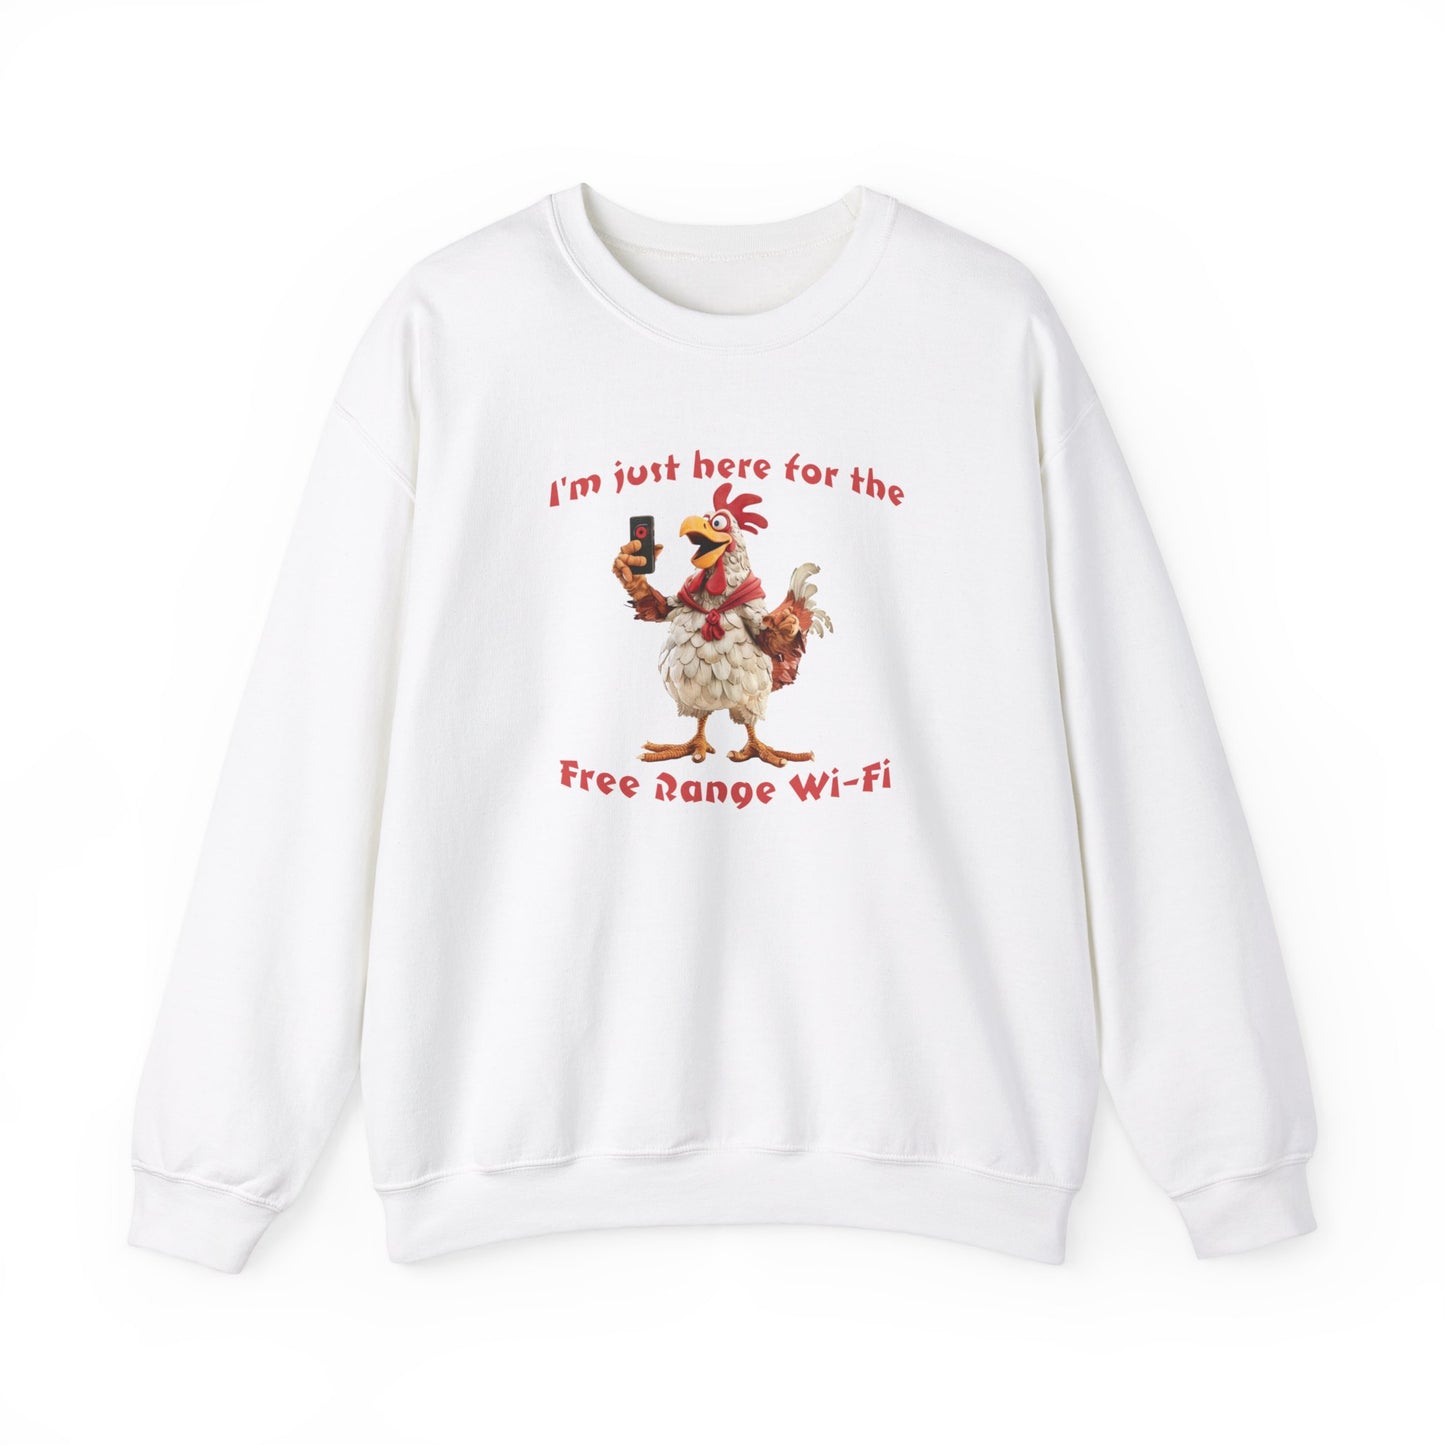 Chicken Funny Print Unisex Crewneck Sweatshirt, 'I'm just here for the free range Wi-Fi', White/Black/Sand/Navy